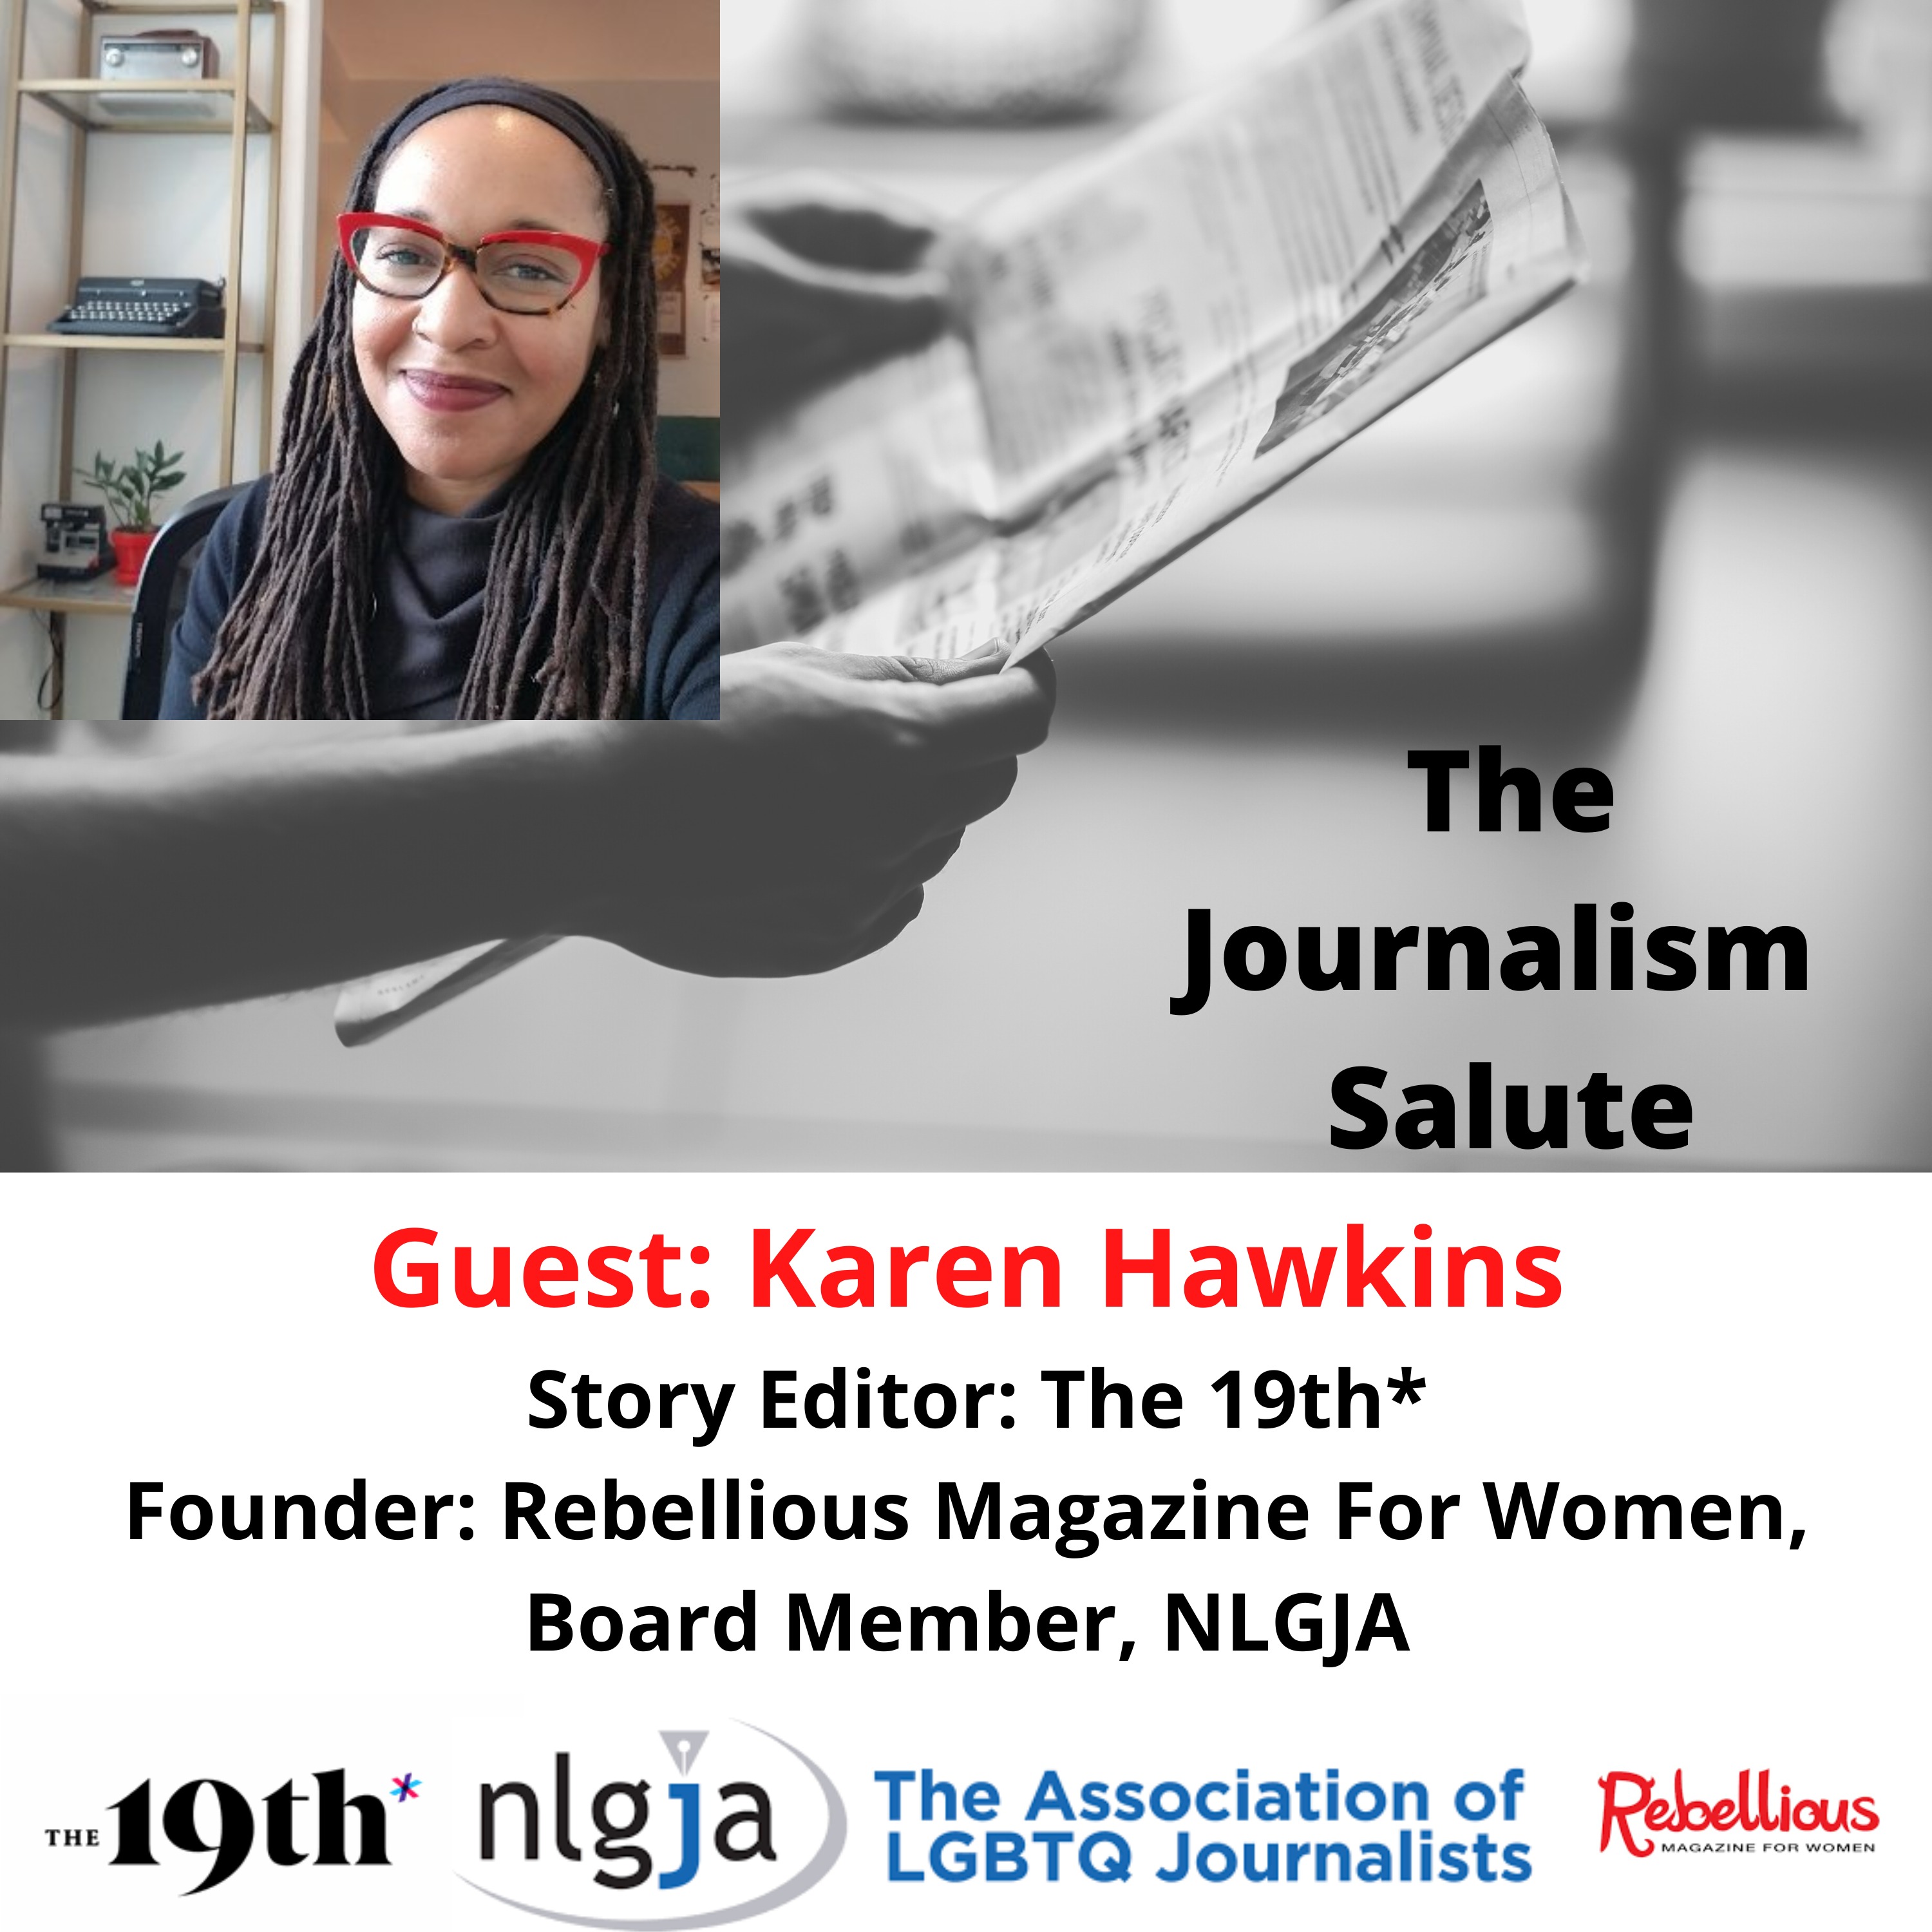 Karen Hawkins, Story Editor: The 19th*